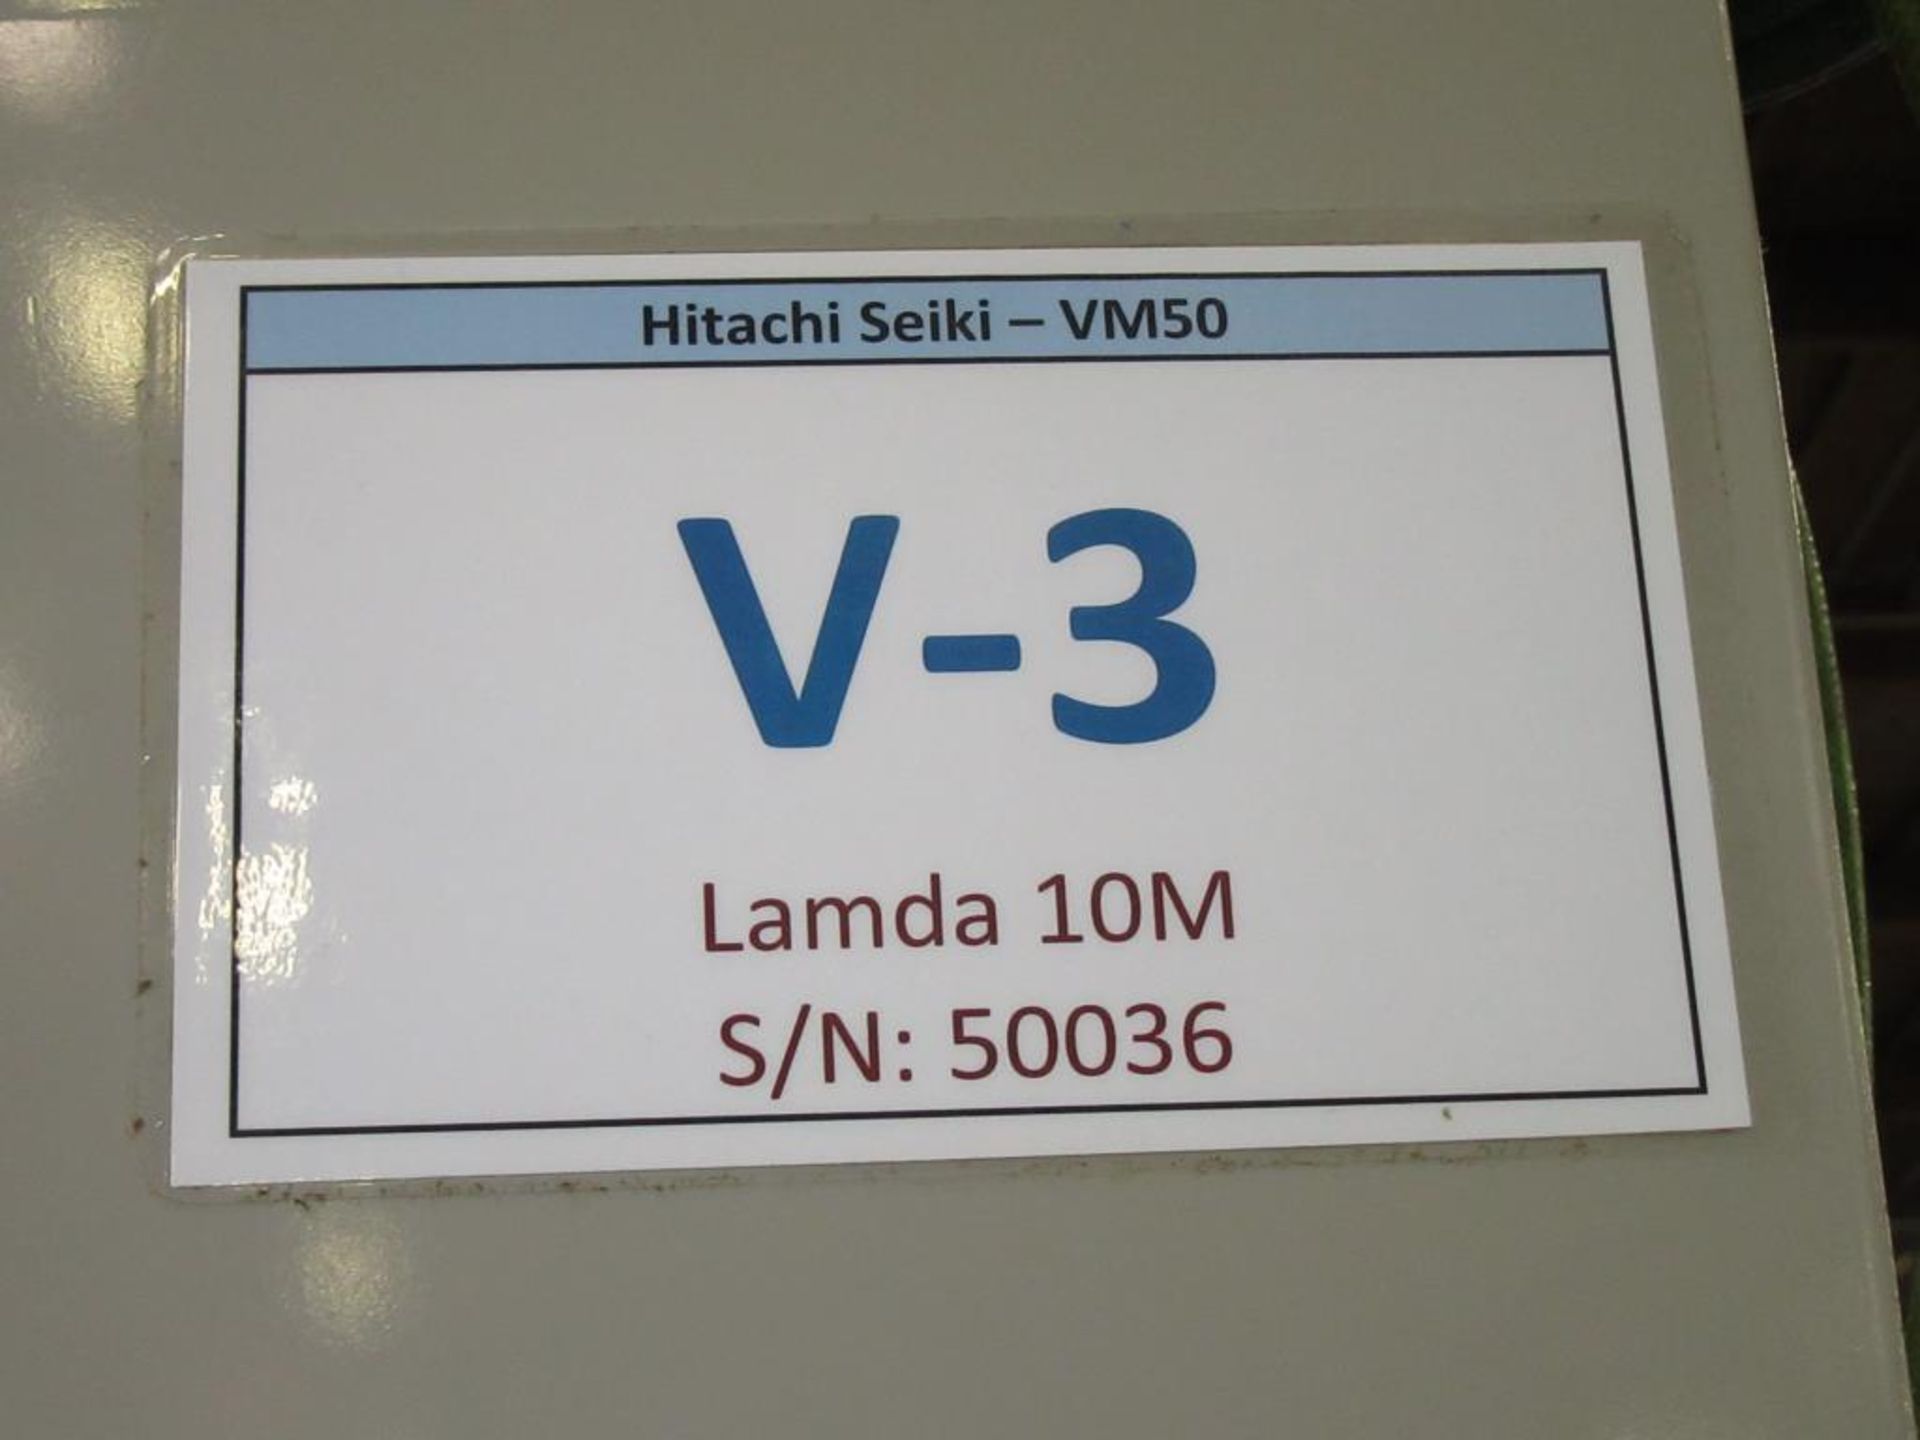 Hitachi Seiki VM-50. 1997 - CNC Vertical Machining Center with Seicos Lambda 10M 3-Axis Control - Image 14 of 15